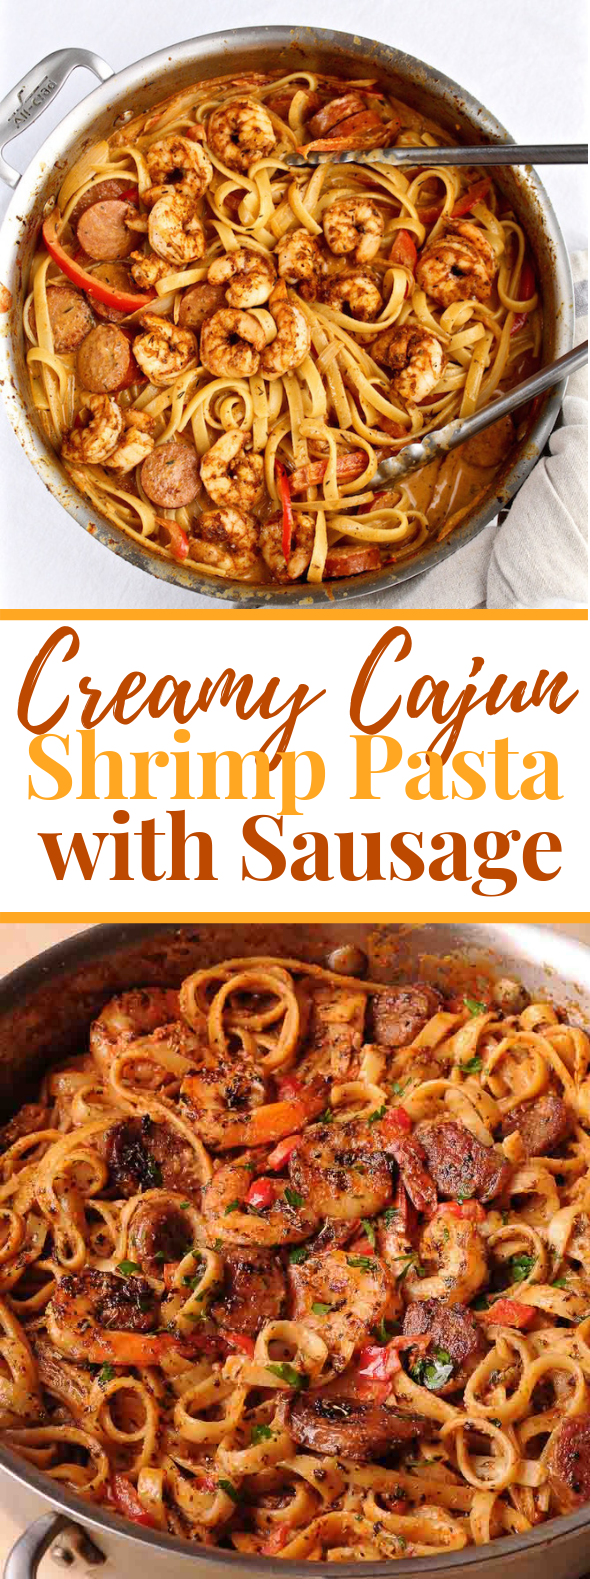 Creamy Cajun Shrimp Pasta with Sausage #dinner #simple